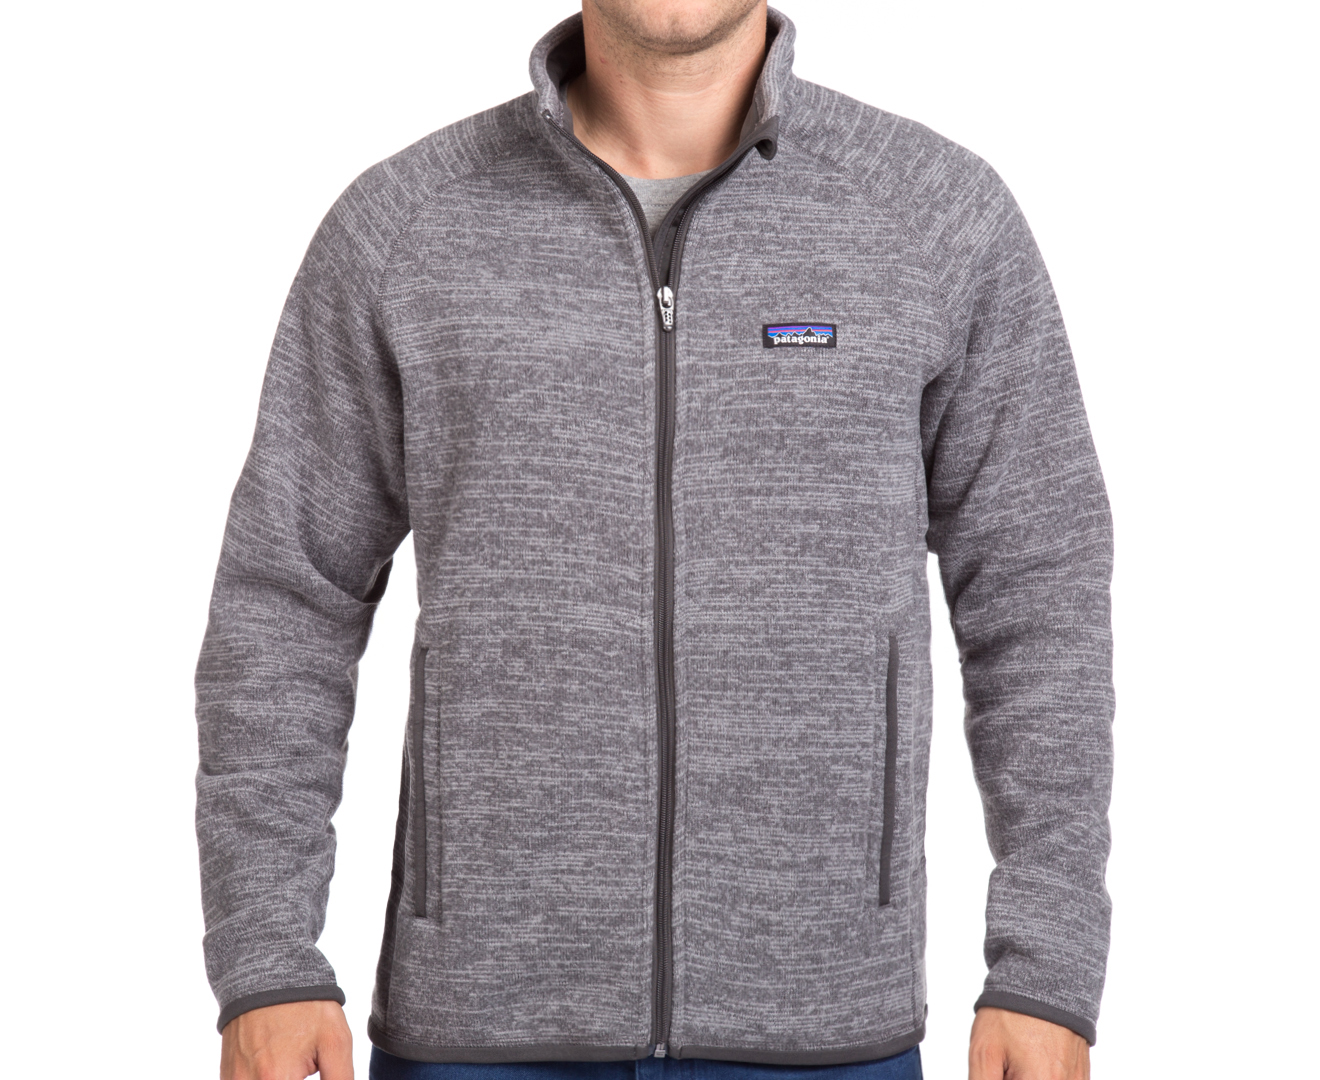 Patagonia Men's Better Sweater Jacket - Nickel | Catch.com.au